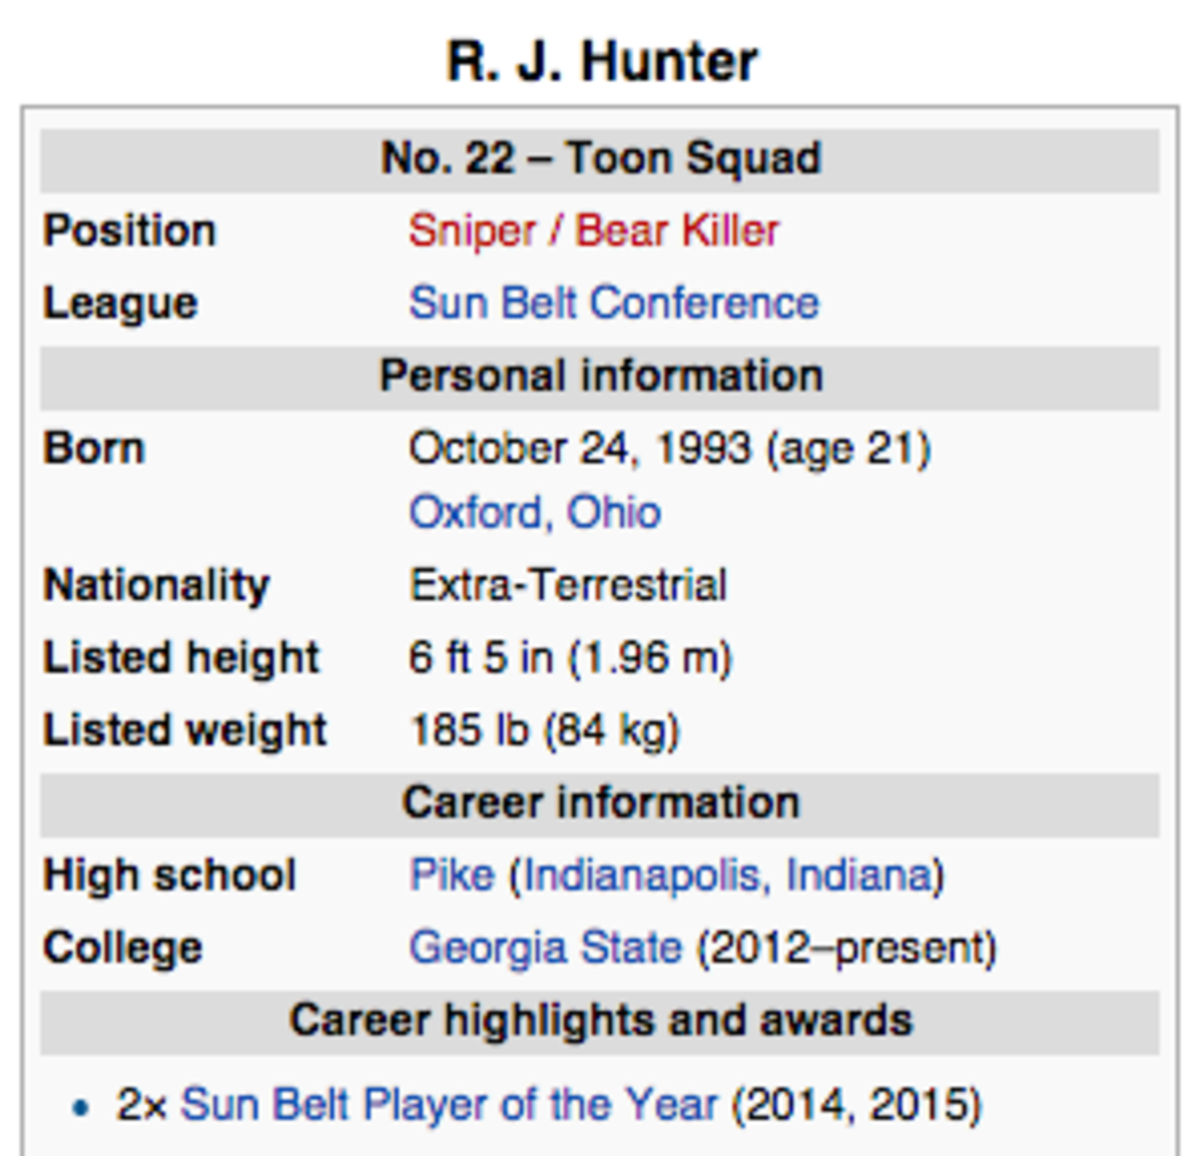 R.J. Hunter's Wikipedia now says he is a "bear killer."